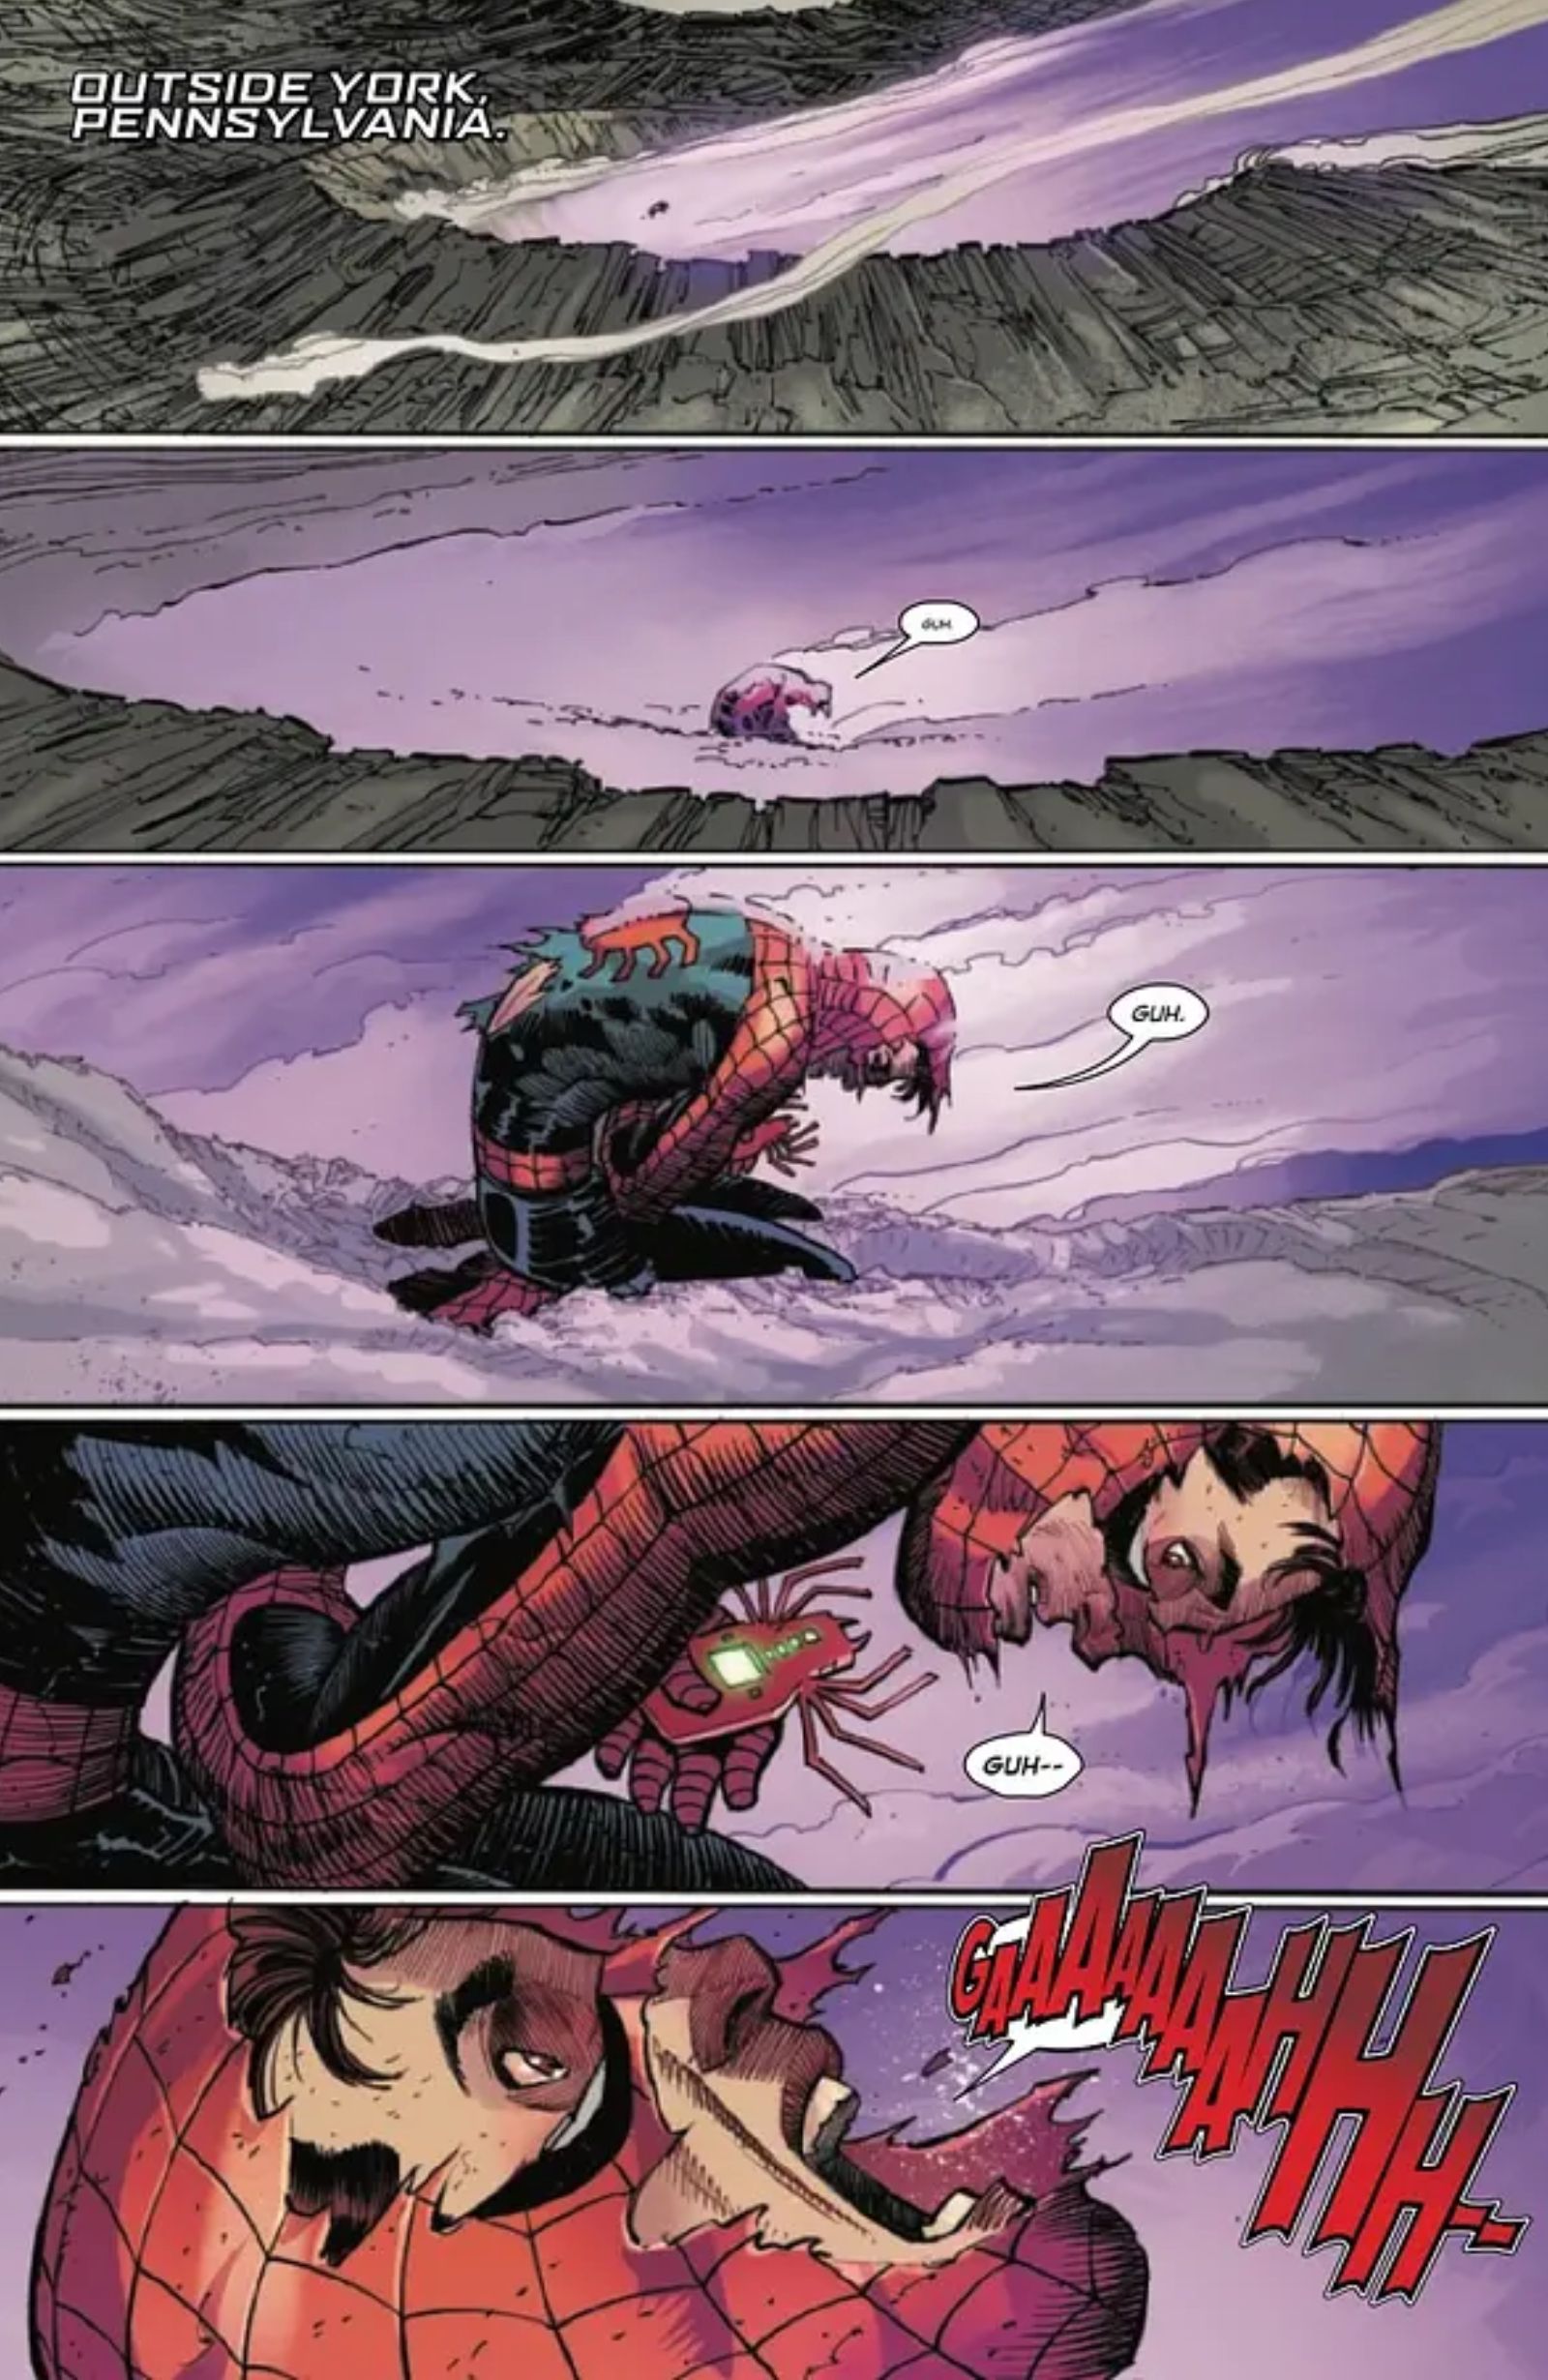 John Romita Junior draws Peter Parker as Spider Man screaming